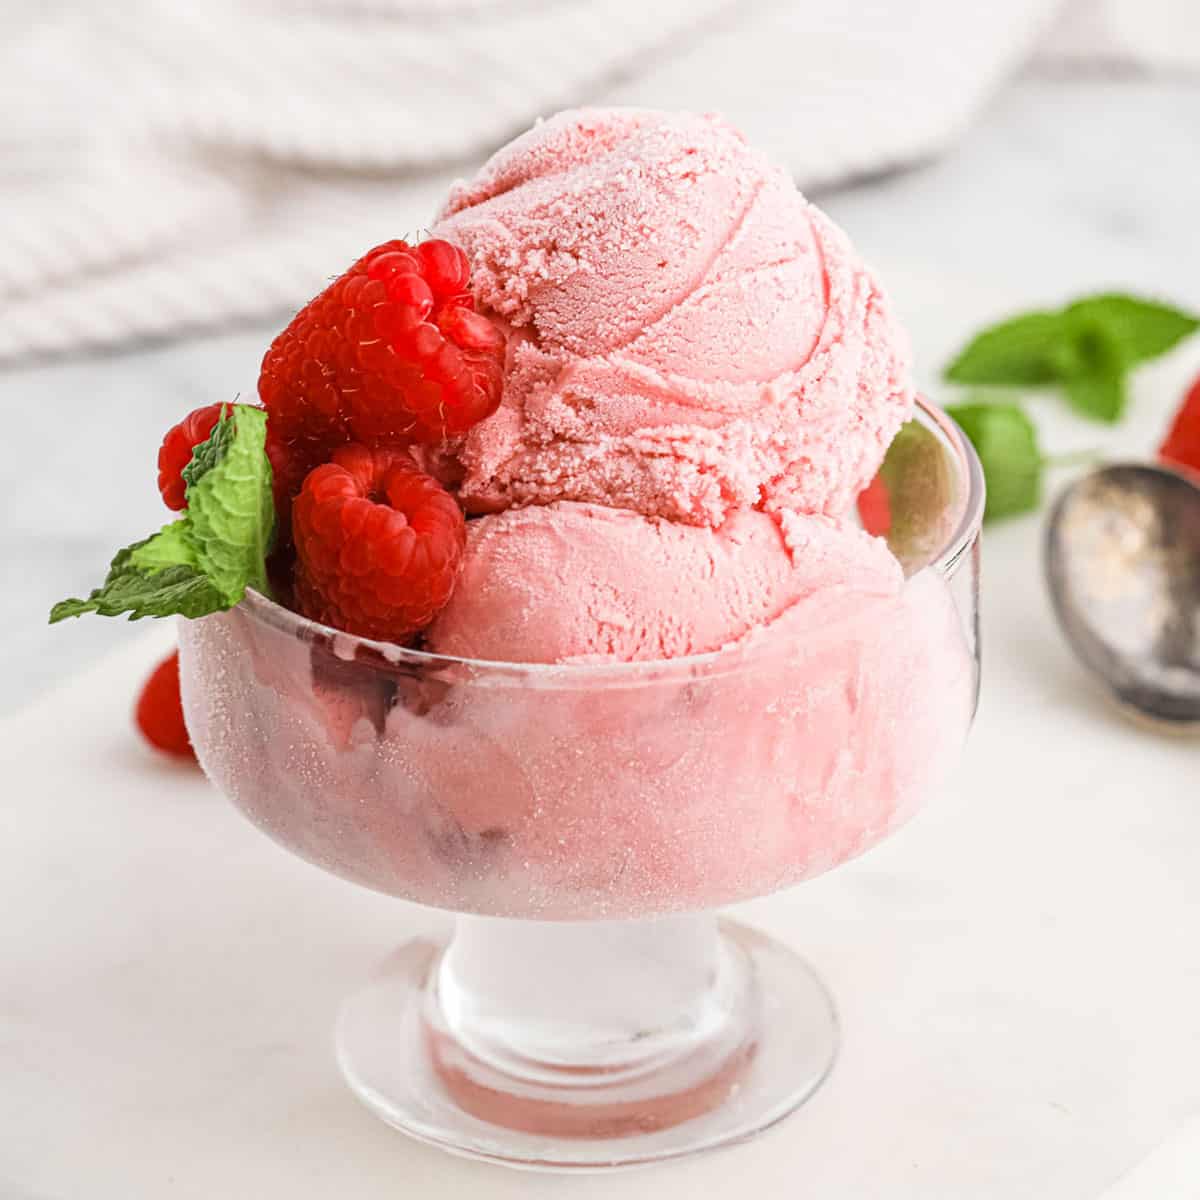 How to Make Raspberry Ice Cream without an Ice Cream Maker - Veena Azmanov